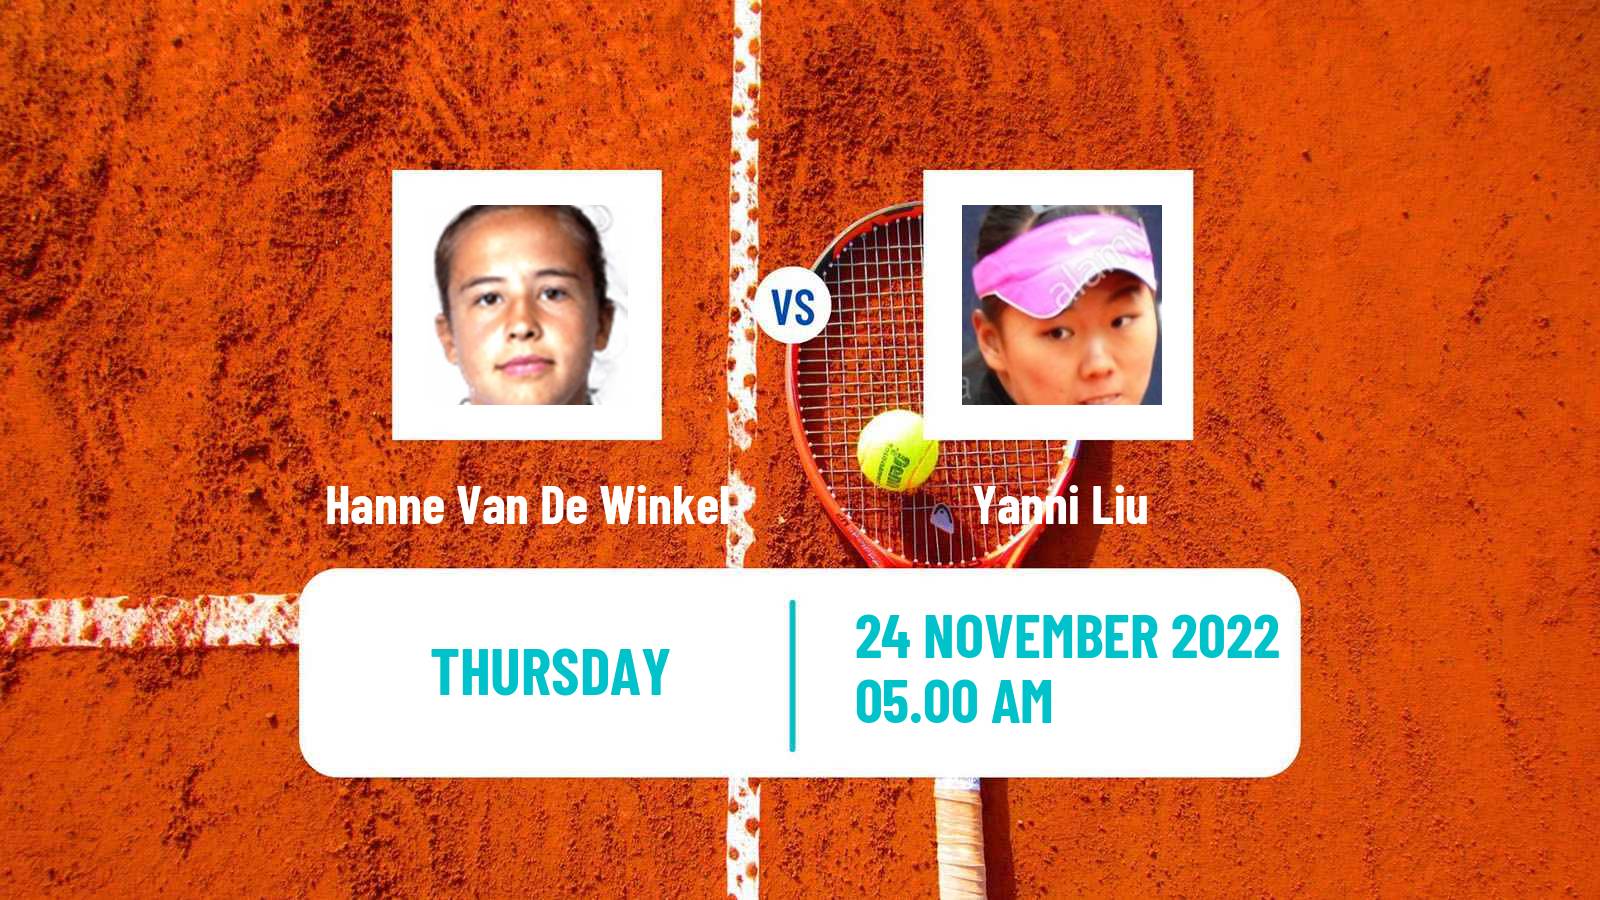 Tennis ITF Tournaments Hanne Van De Winkel - Yanni Liu